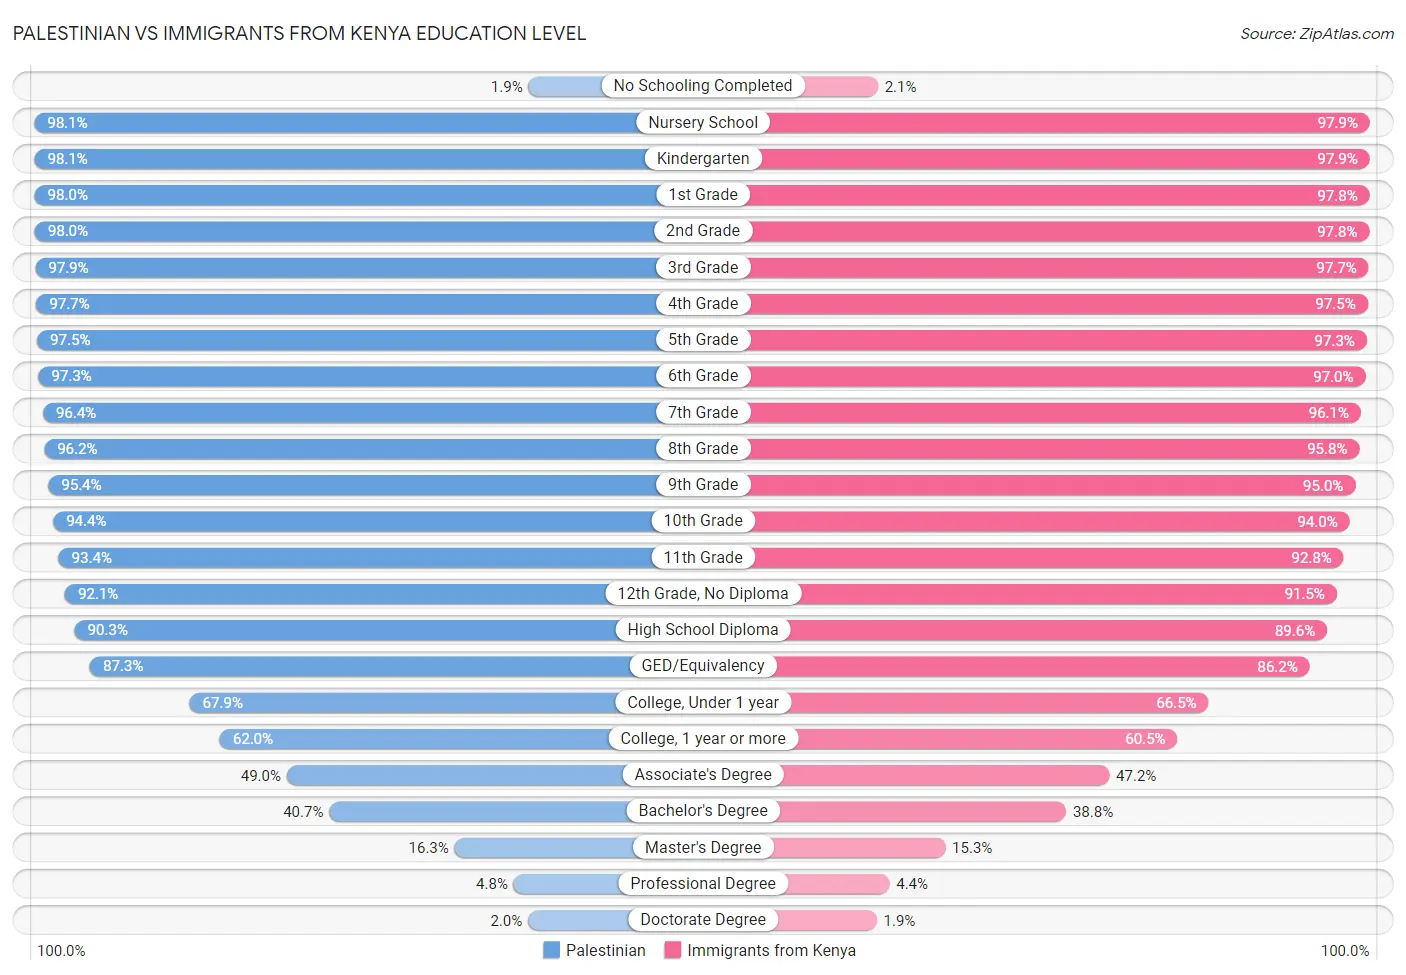 Palestinian vs Immigrants from Kenya Education Level